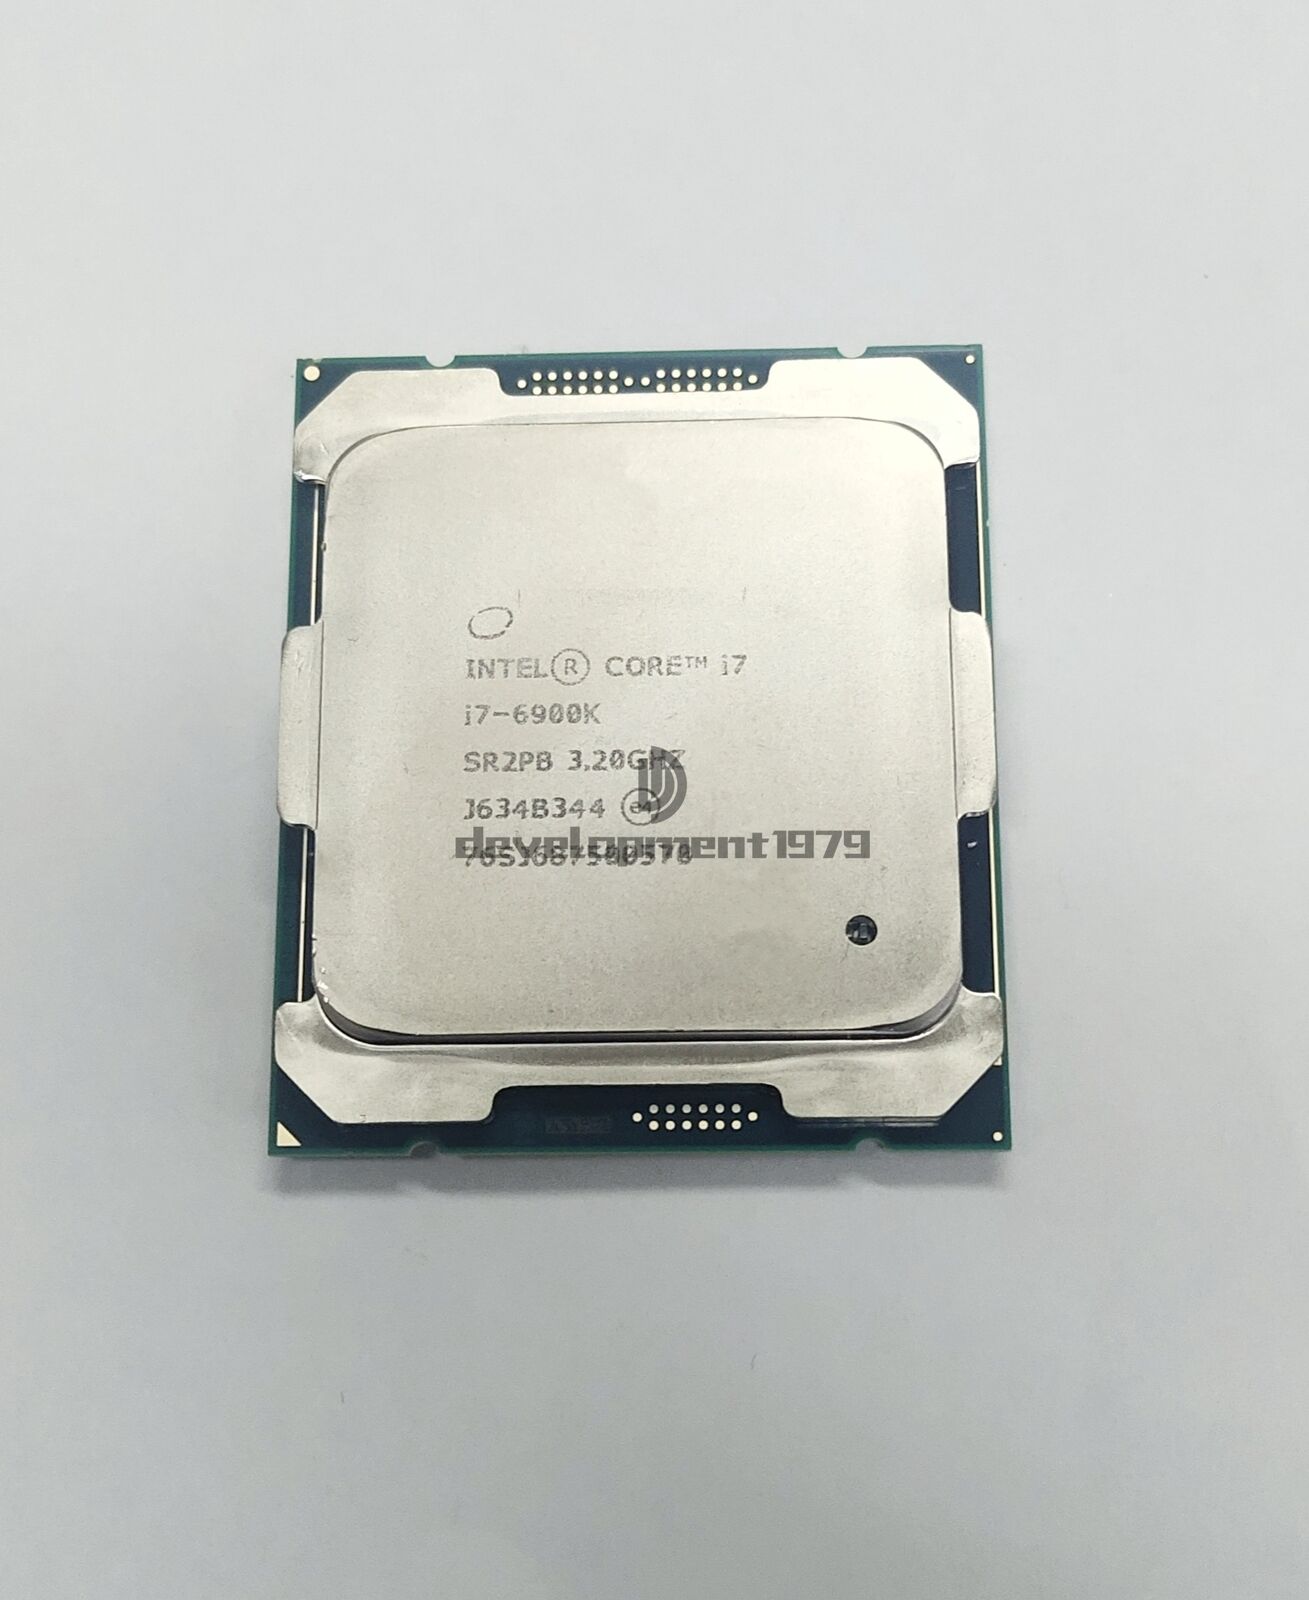 eeuwig . Kunstmatig 1PC i7 6900K Intel Core i7-6900K Processor 3.2GHz Used | eBay